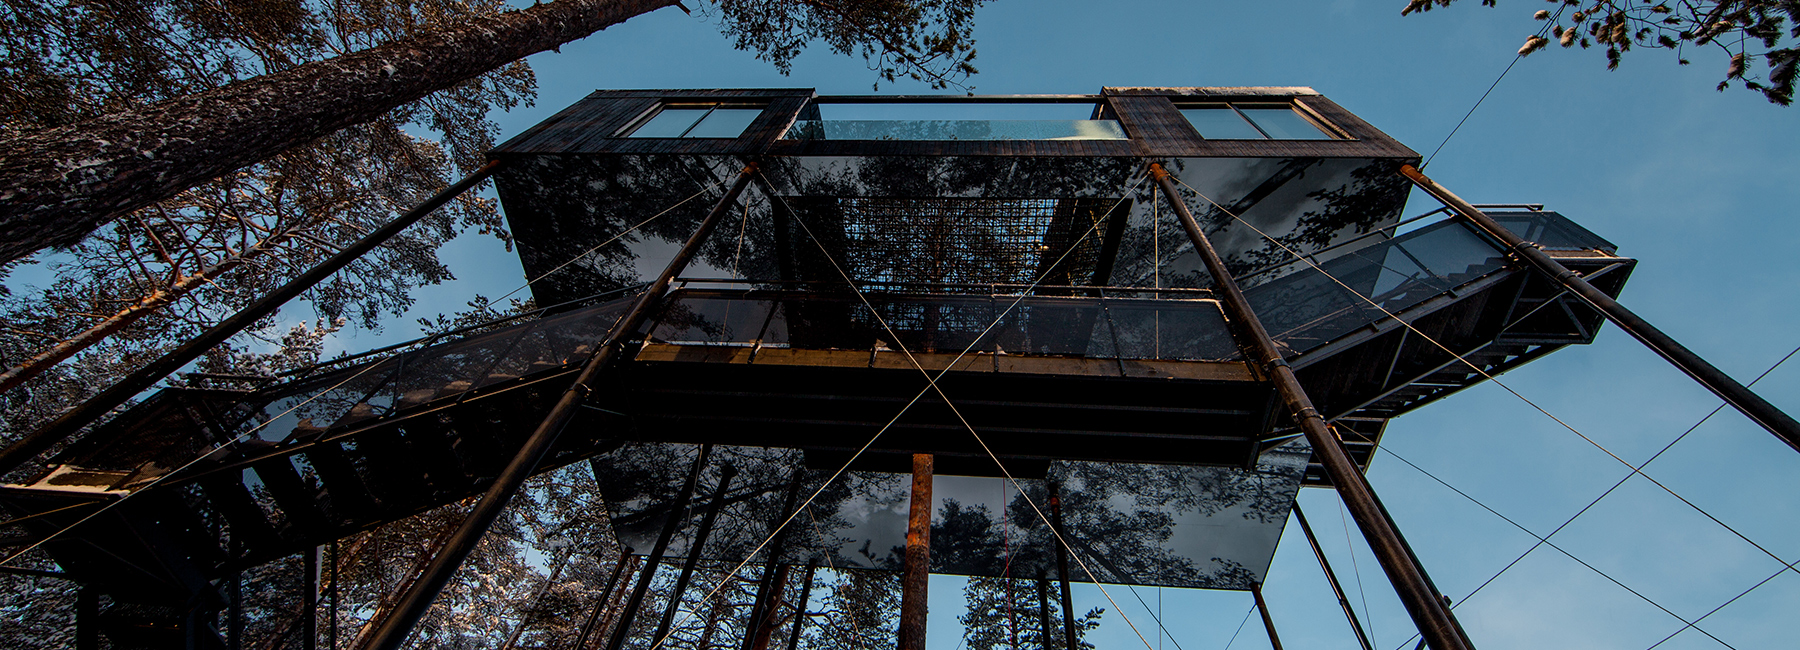 sleep among the treetops in snøhetta's floating cabin in sweden